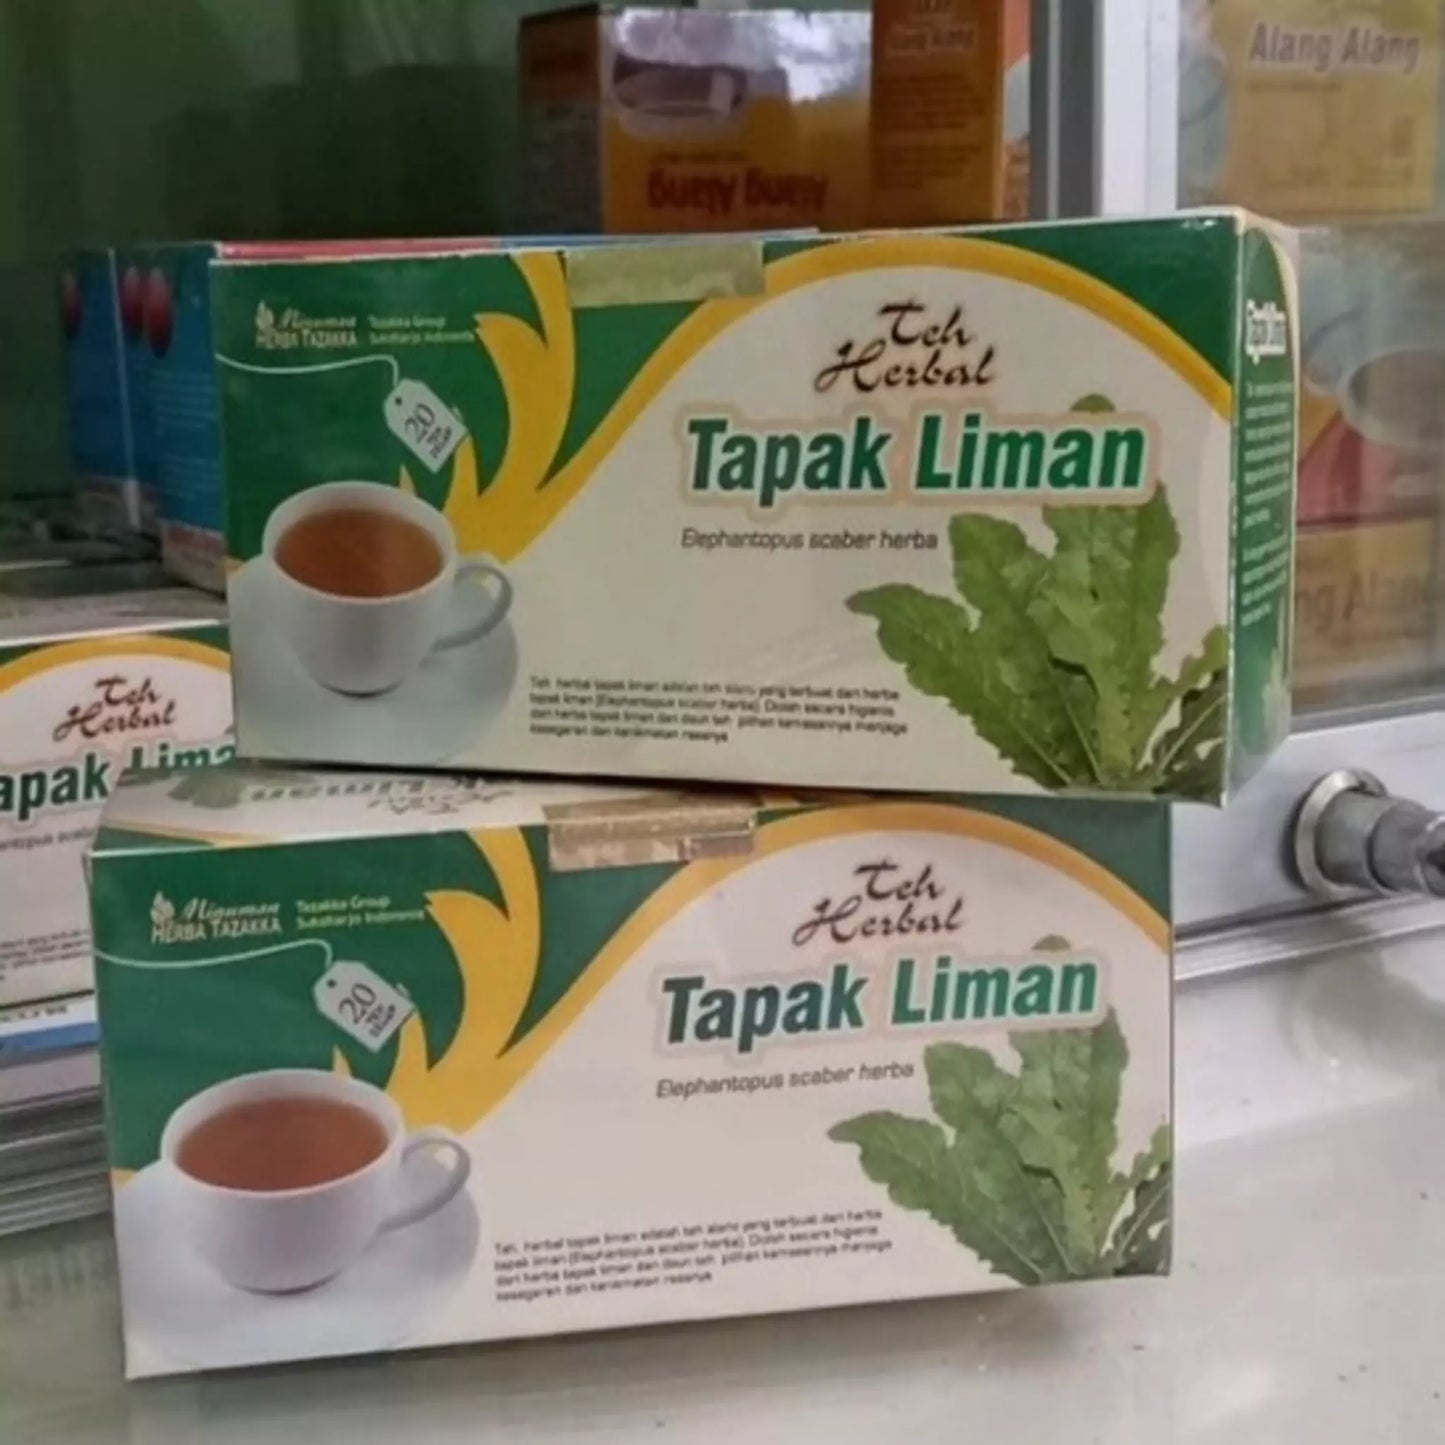 Elephantopus Scaber Leaf Tea Bags For Sale, Elephantopus Scaber Herbal Tea